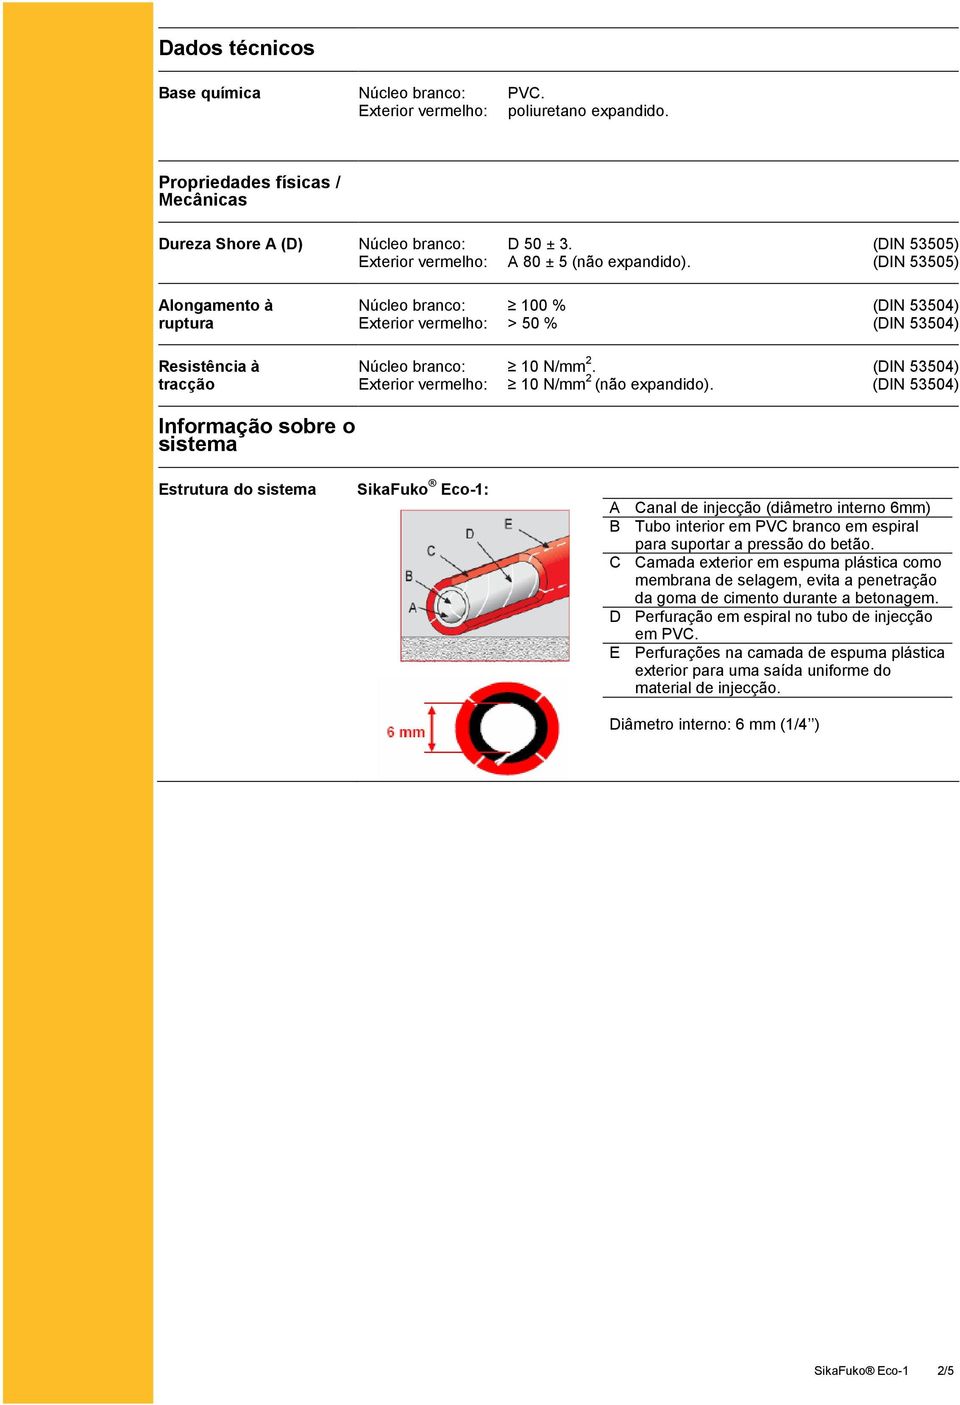 (DIN 53505) Alongamento à ruptura Resistência à tracção Núcleo branco: 100 % (DIN 53504) Exterior vermelho: > 50 % (DIN 53504) Núcleo branco: 10 N/mm 2.